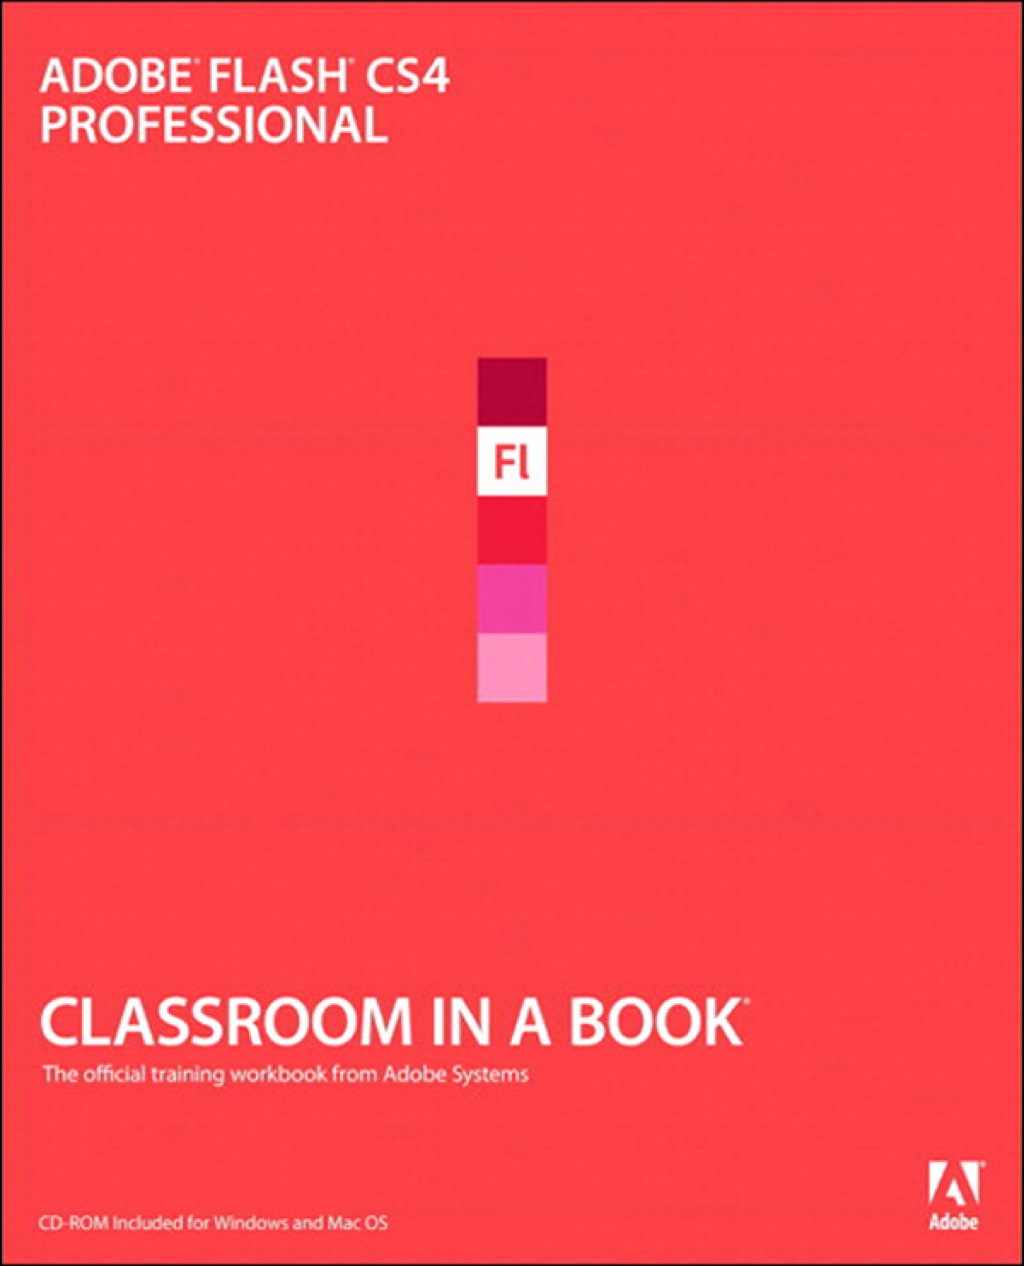 Adobe Flash CS4 Professional Classroom in a Book (eBook) - Adobe Creative Team